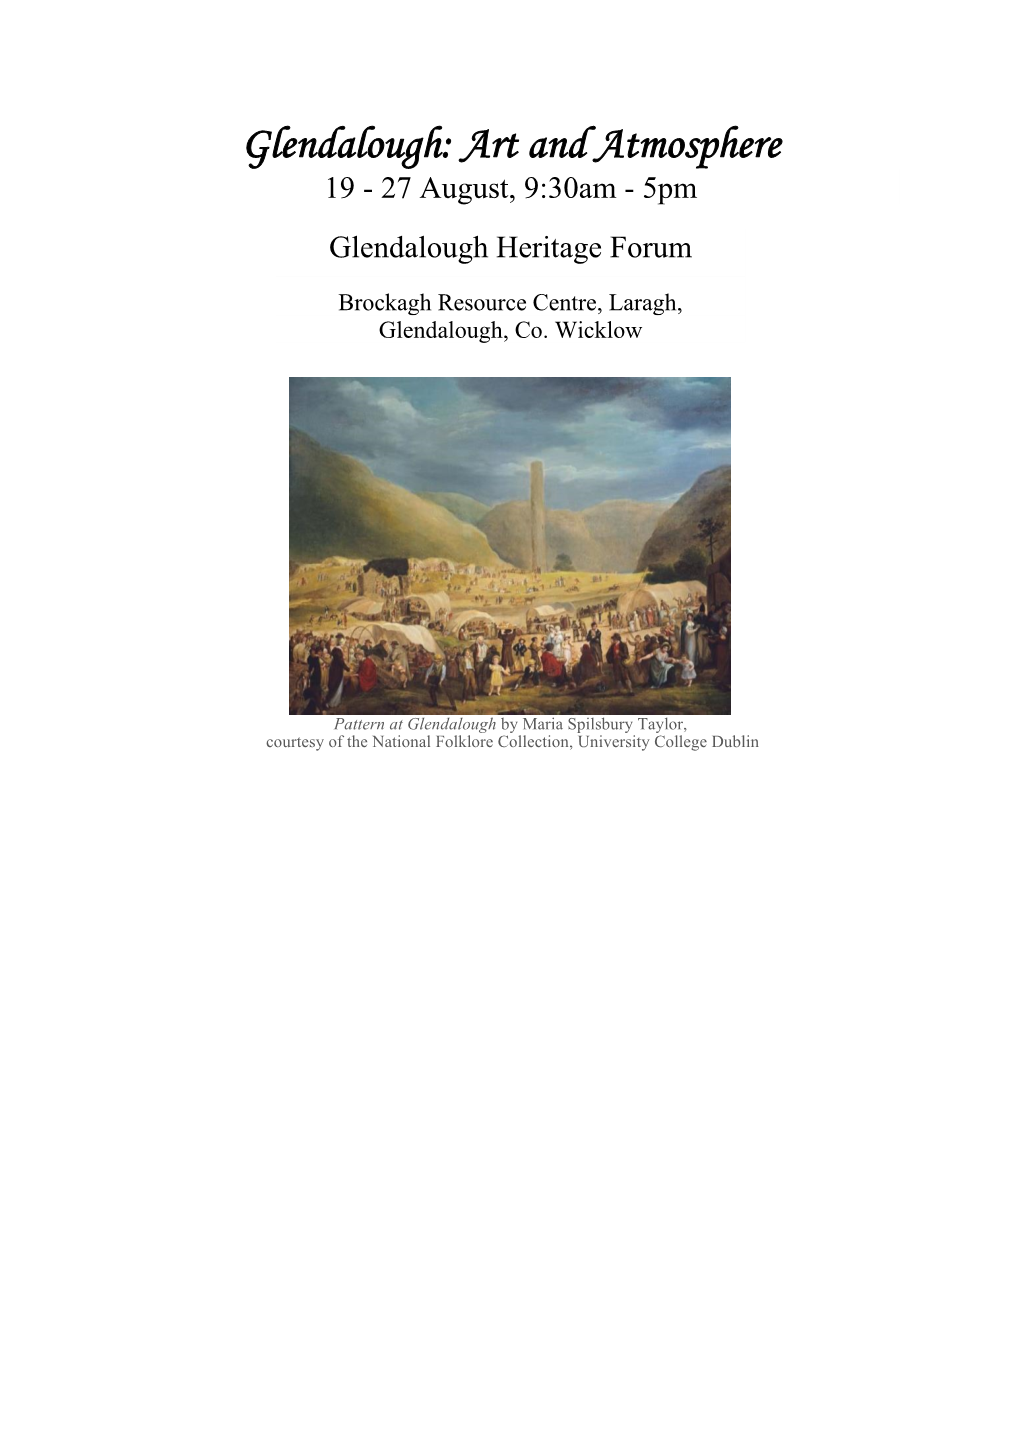 Glendalough: Art and Atmosphere 19 - 27 August, 9:30Am - 5Pm Glendalough Heritage Forum